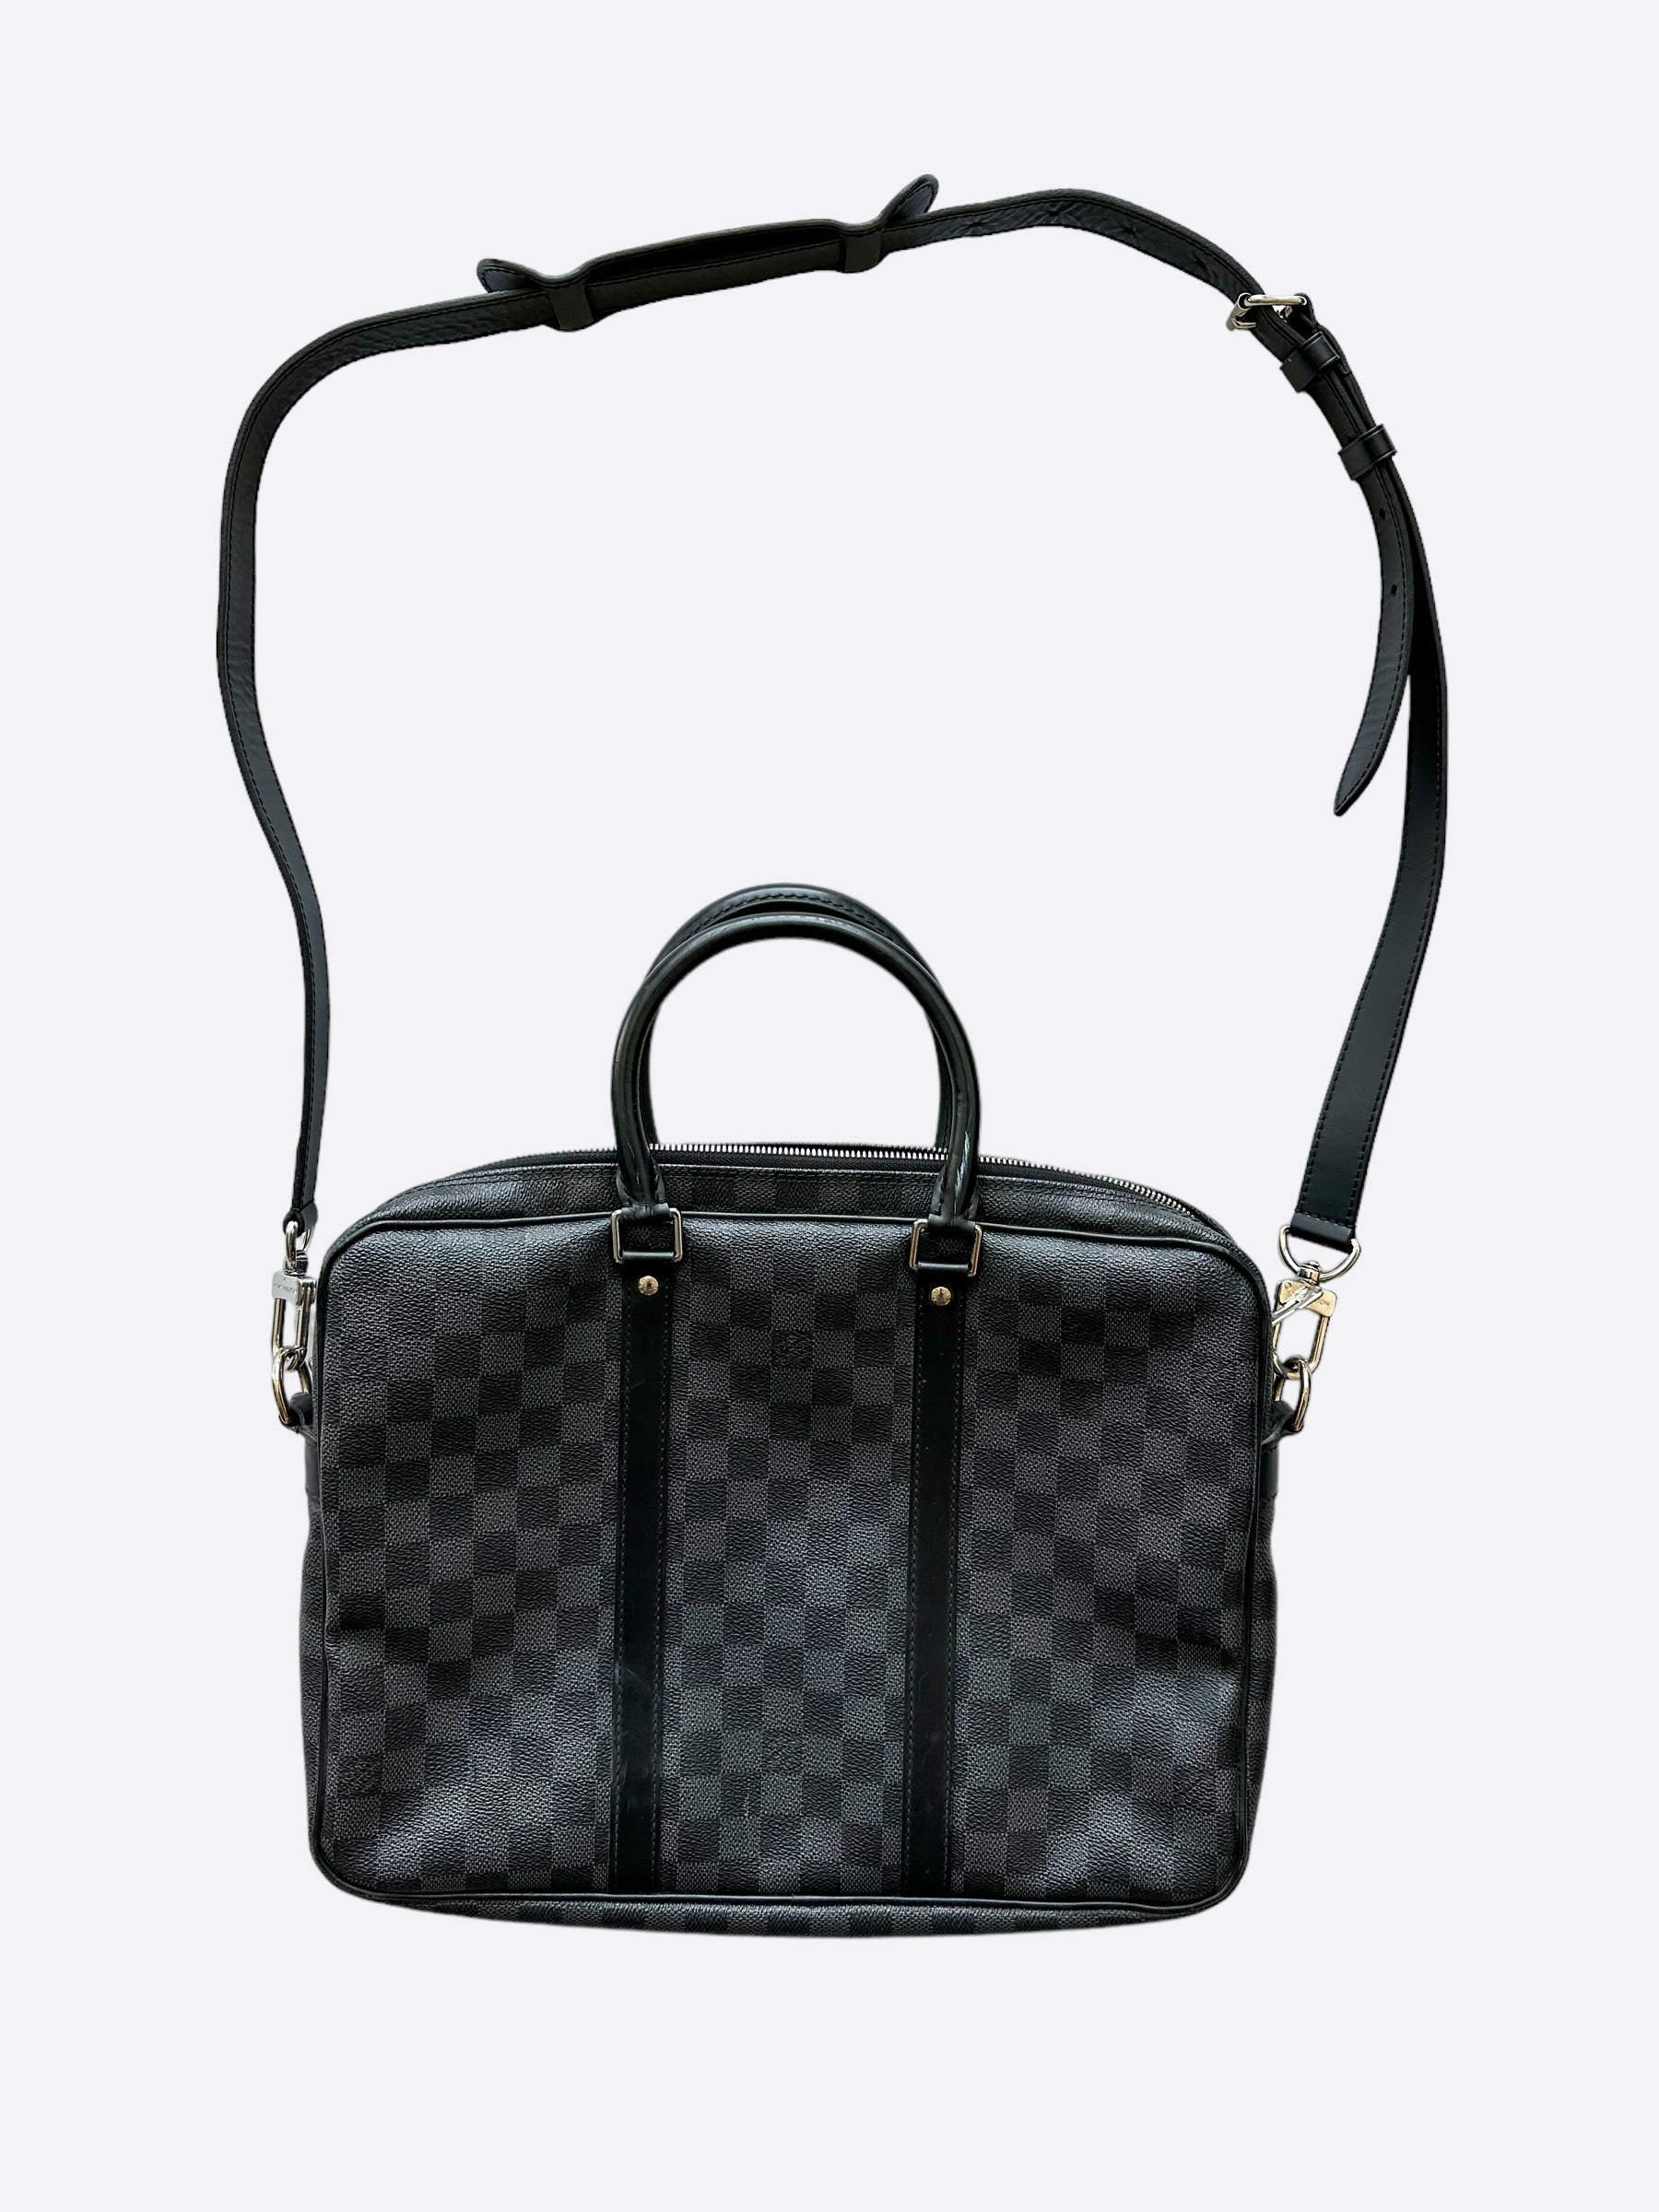 Louis Vuitton Black Leather Voyage PM Luggage Strap Silver Hardware 